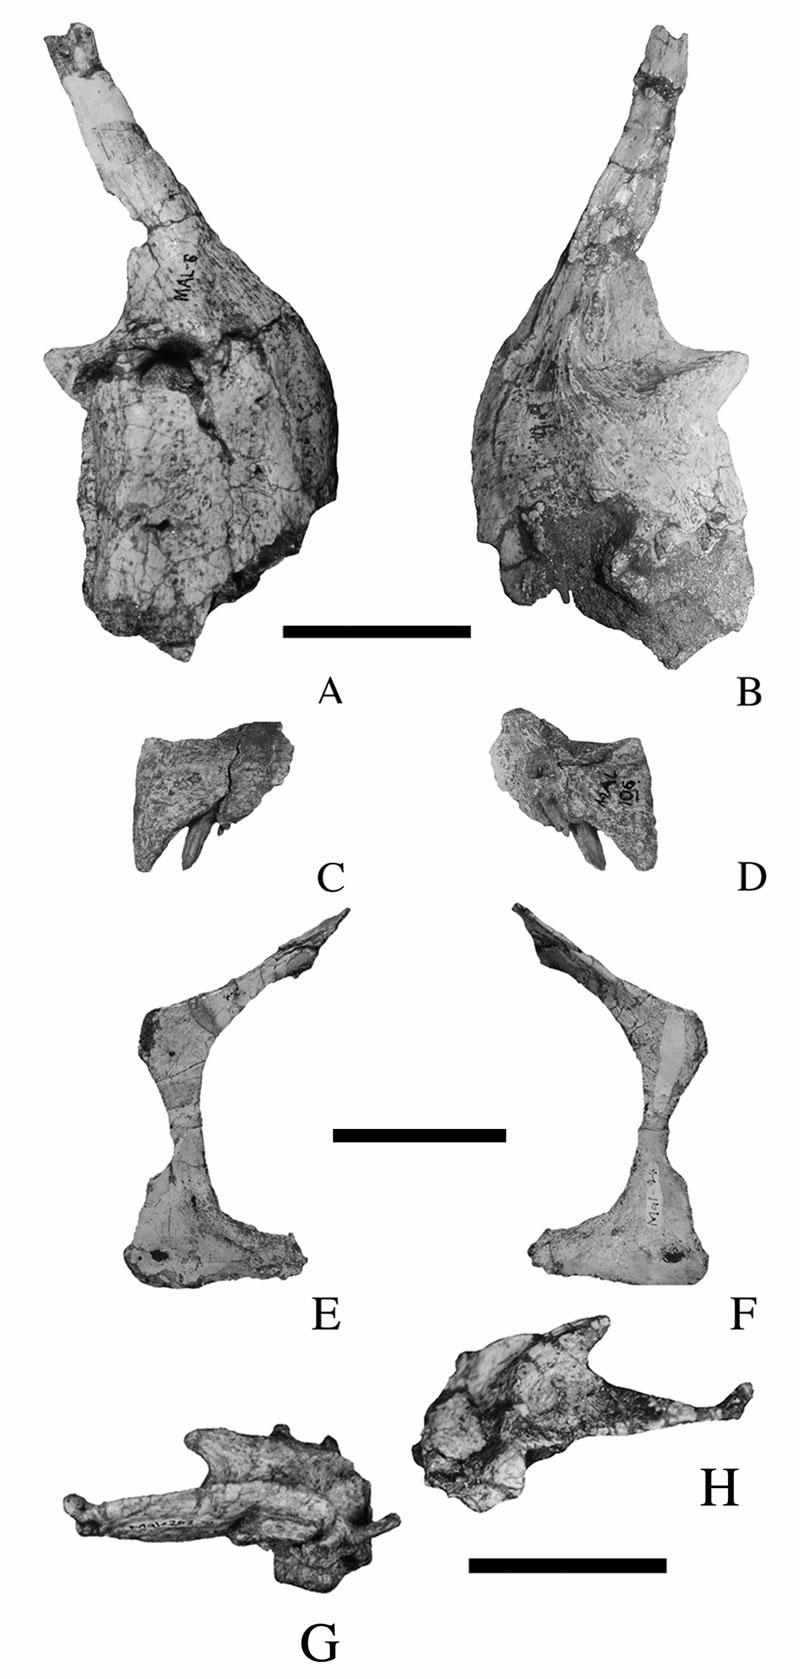 Figure 4. Premaxilla, fragmentary maxilla, jugal, and parietal of Malawisaurus dixeyi.